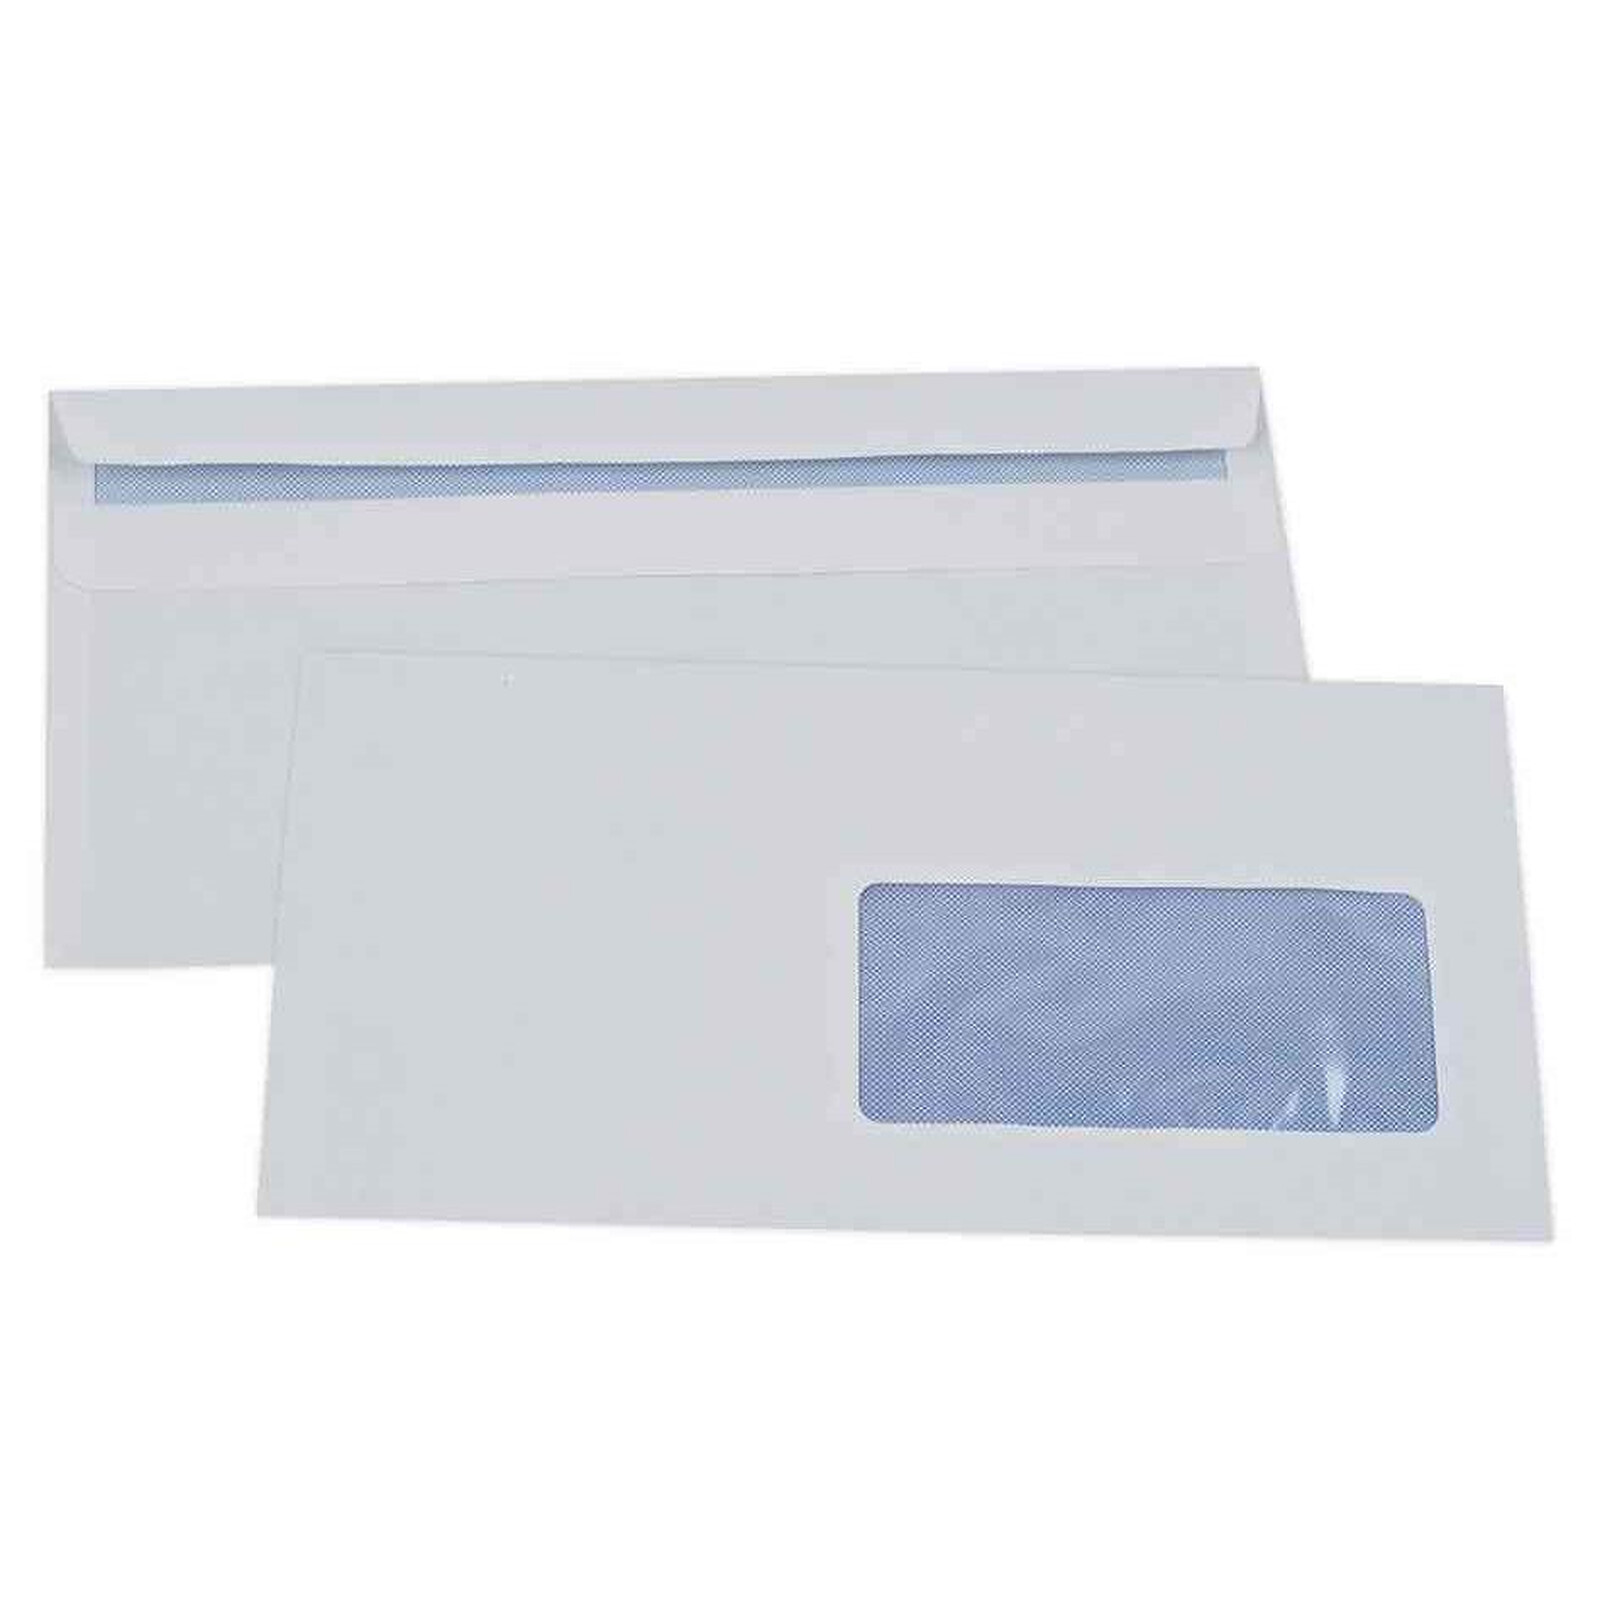 200 enveloppes DL extra blanches La Couronne à bande protectrice